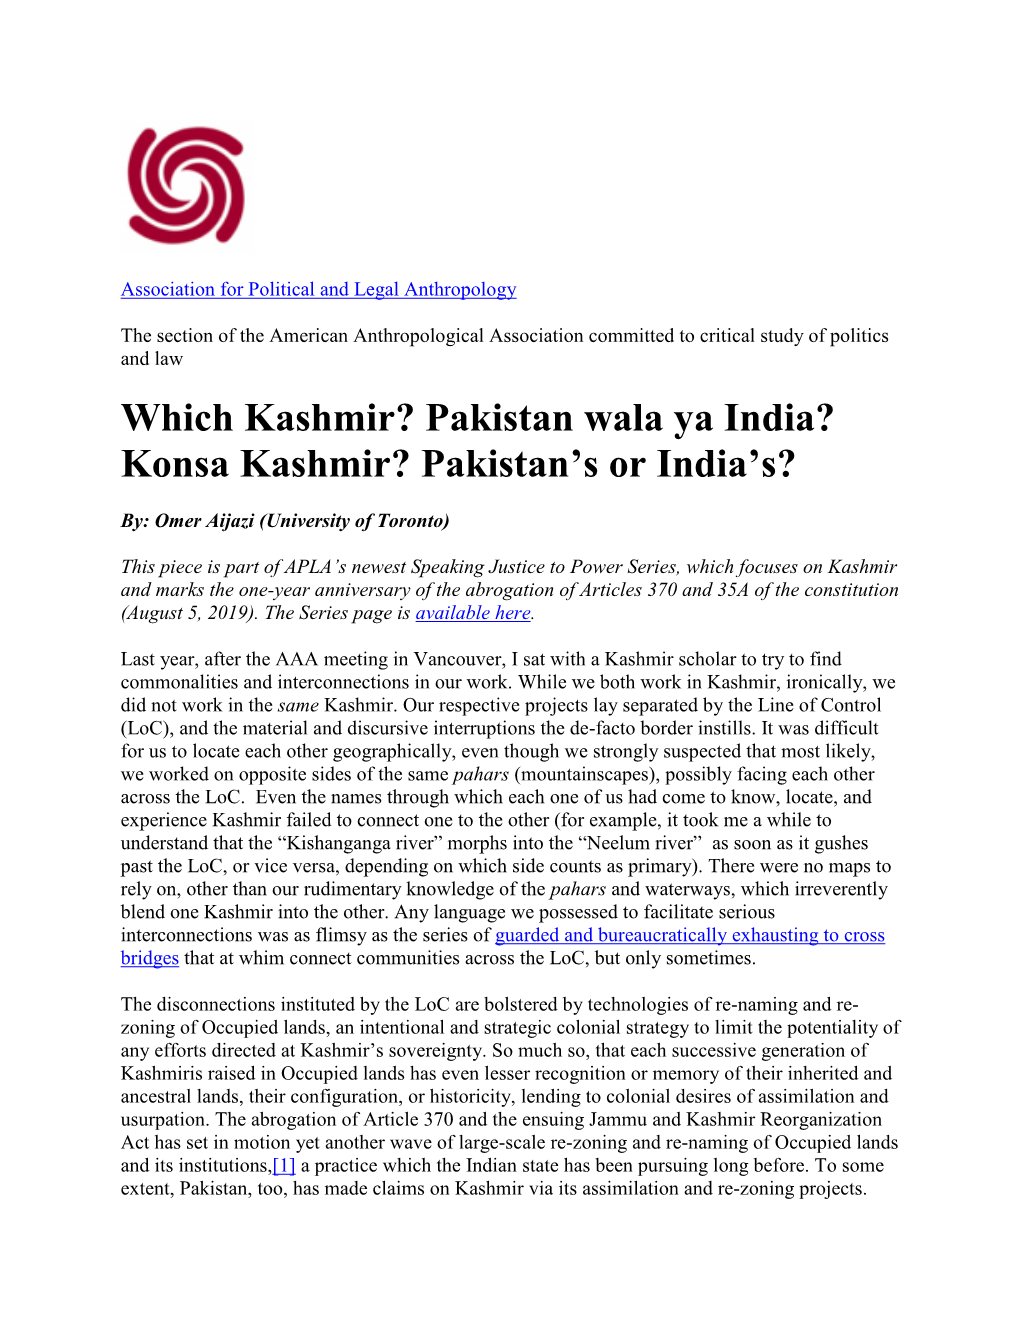 Which Kashmir? Pakistan Wala Ya India? Konsa Kashmir? Pakistan’S Or India’S?